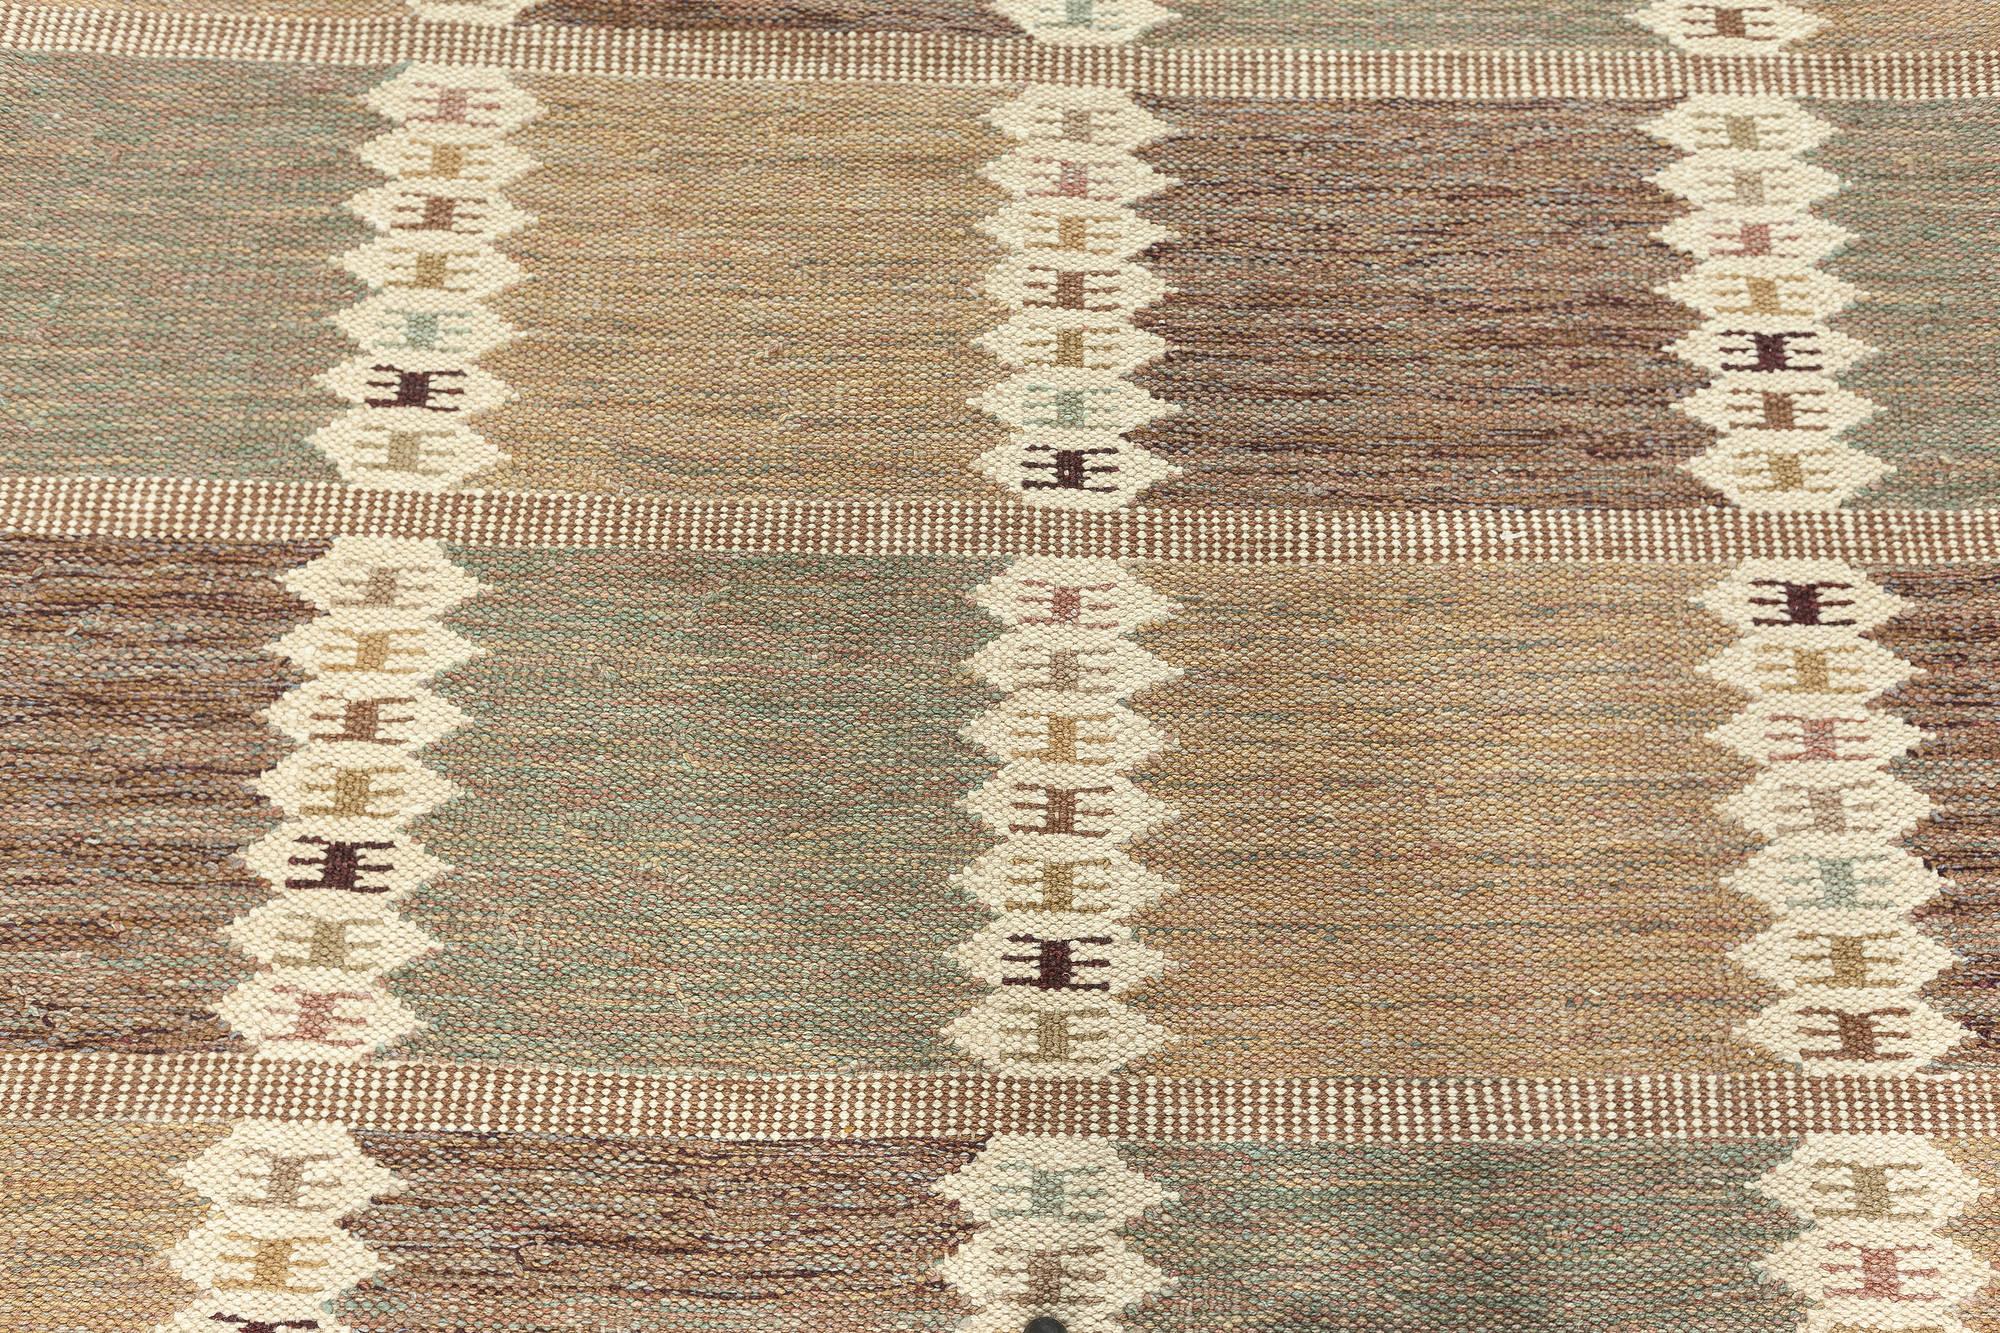 Modern Swedish Design Handmade Wool Rug by Doris Leslie Blau
Size: 13'8